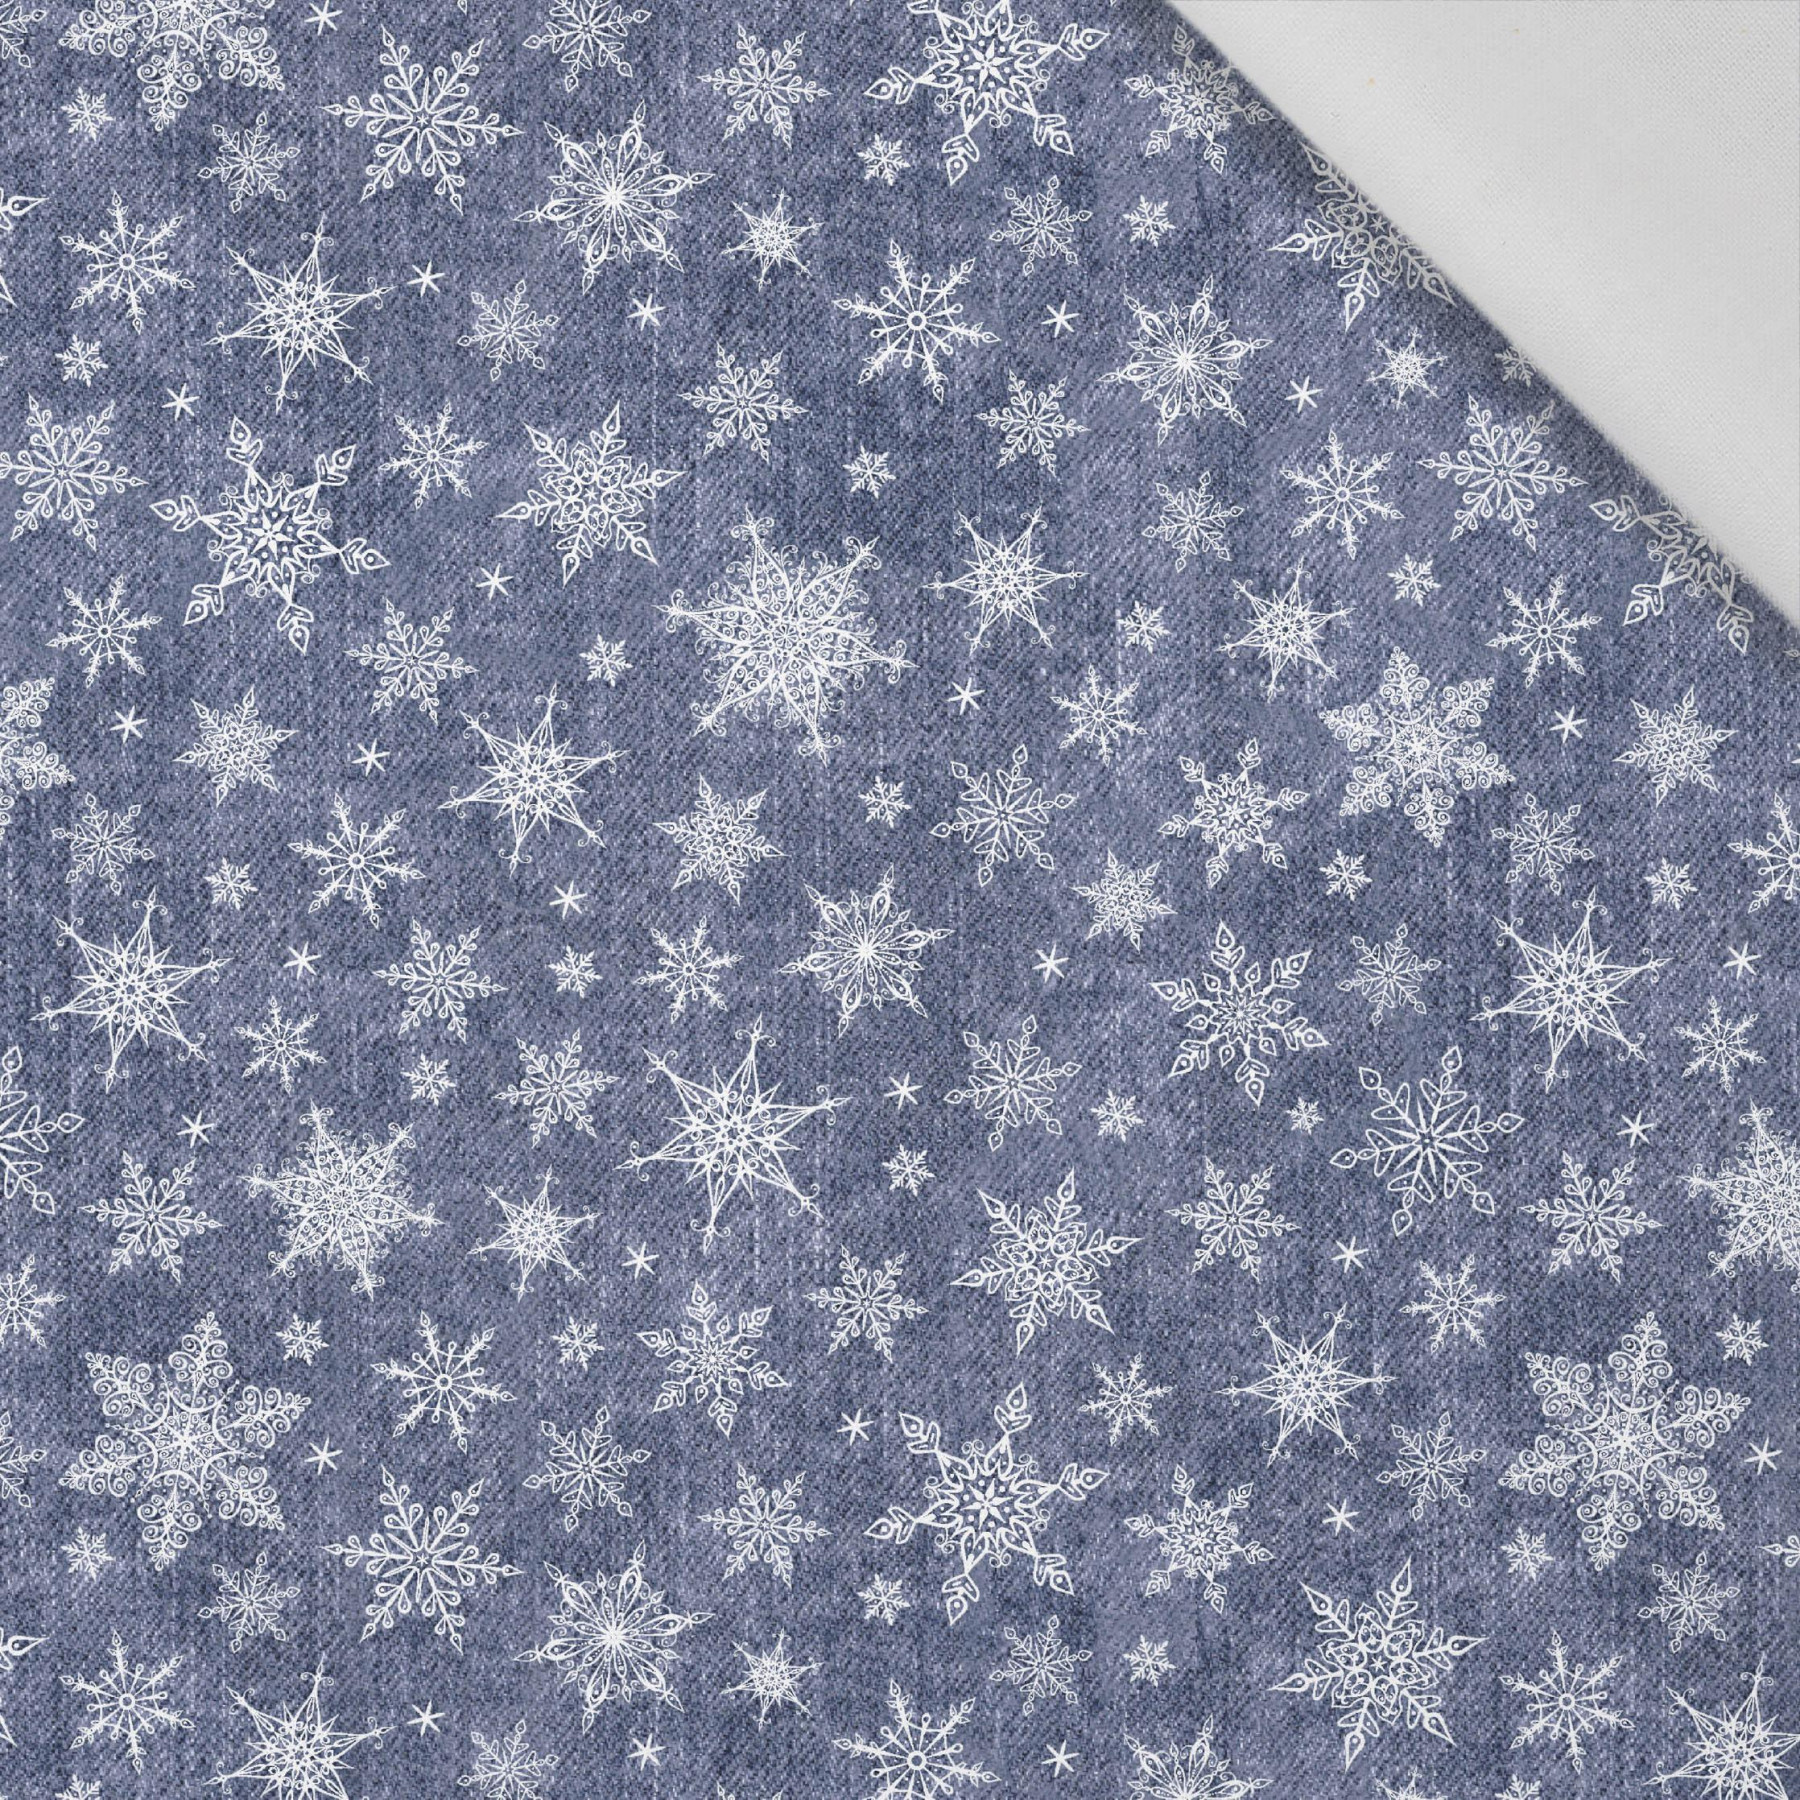 SNOWFLAKES PAT. 2 / ACID WASH DARK BLUE - Cotton woven fabric